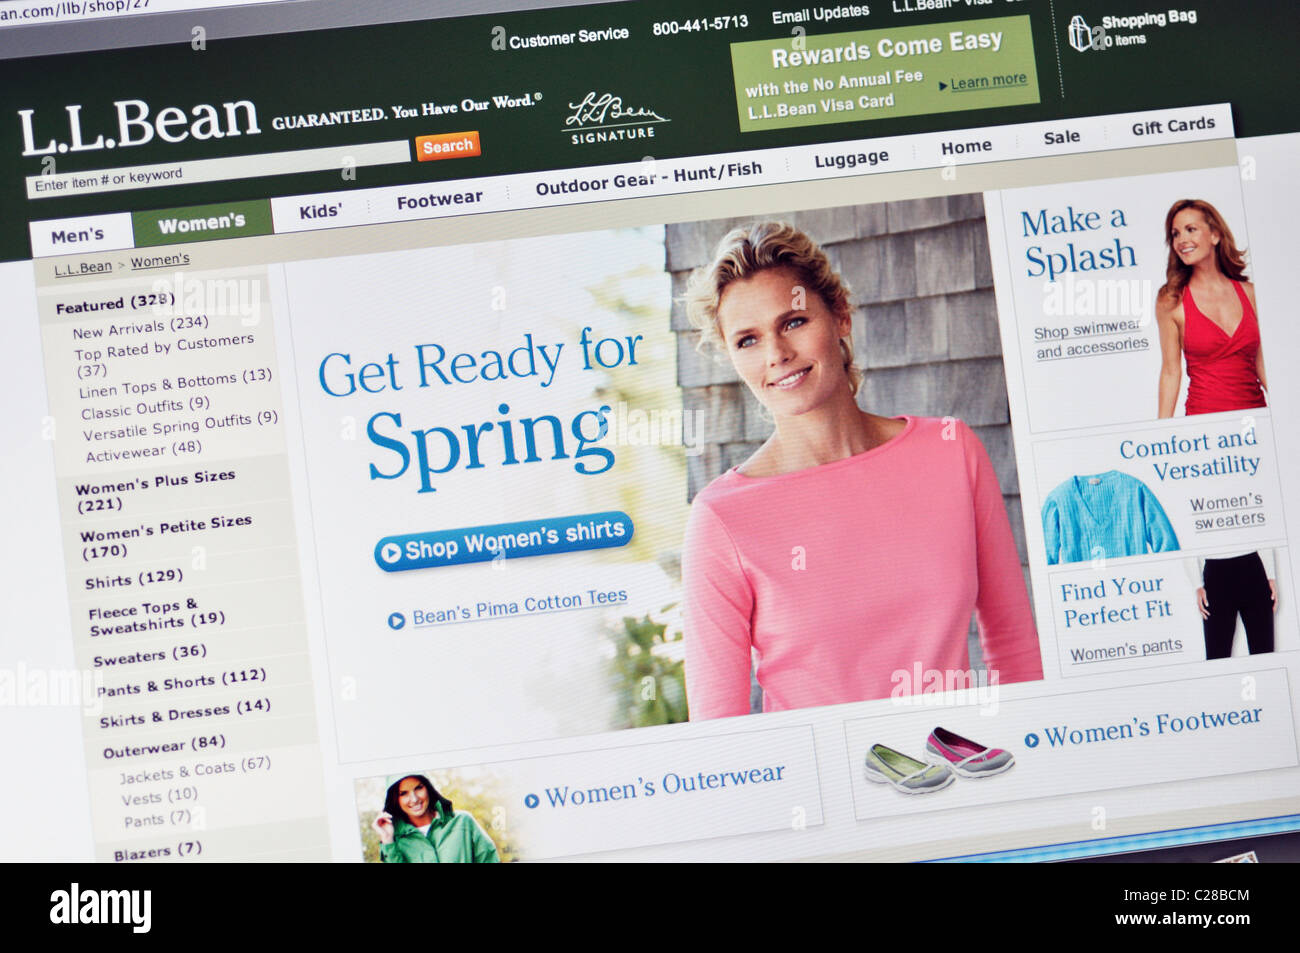 L.L.Bean retail clothing website Stock Photo - Alamy